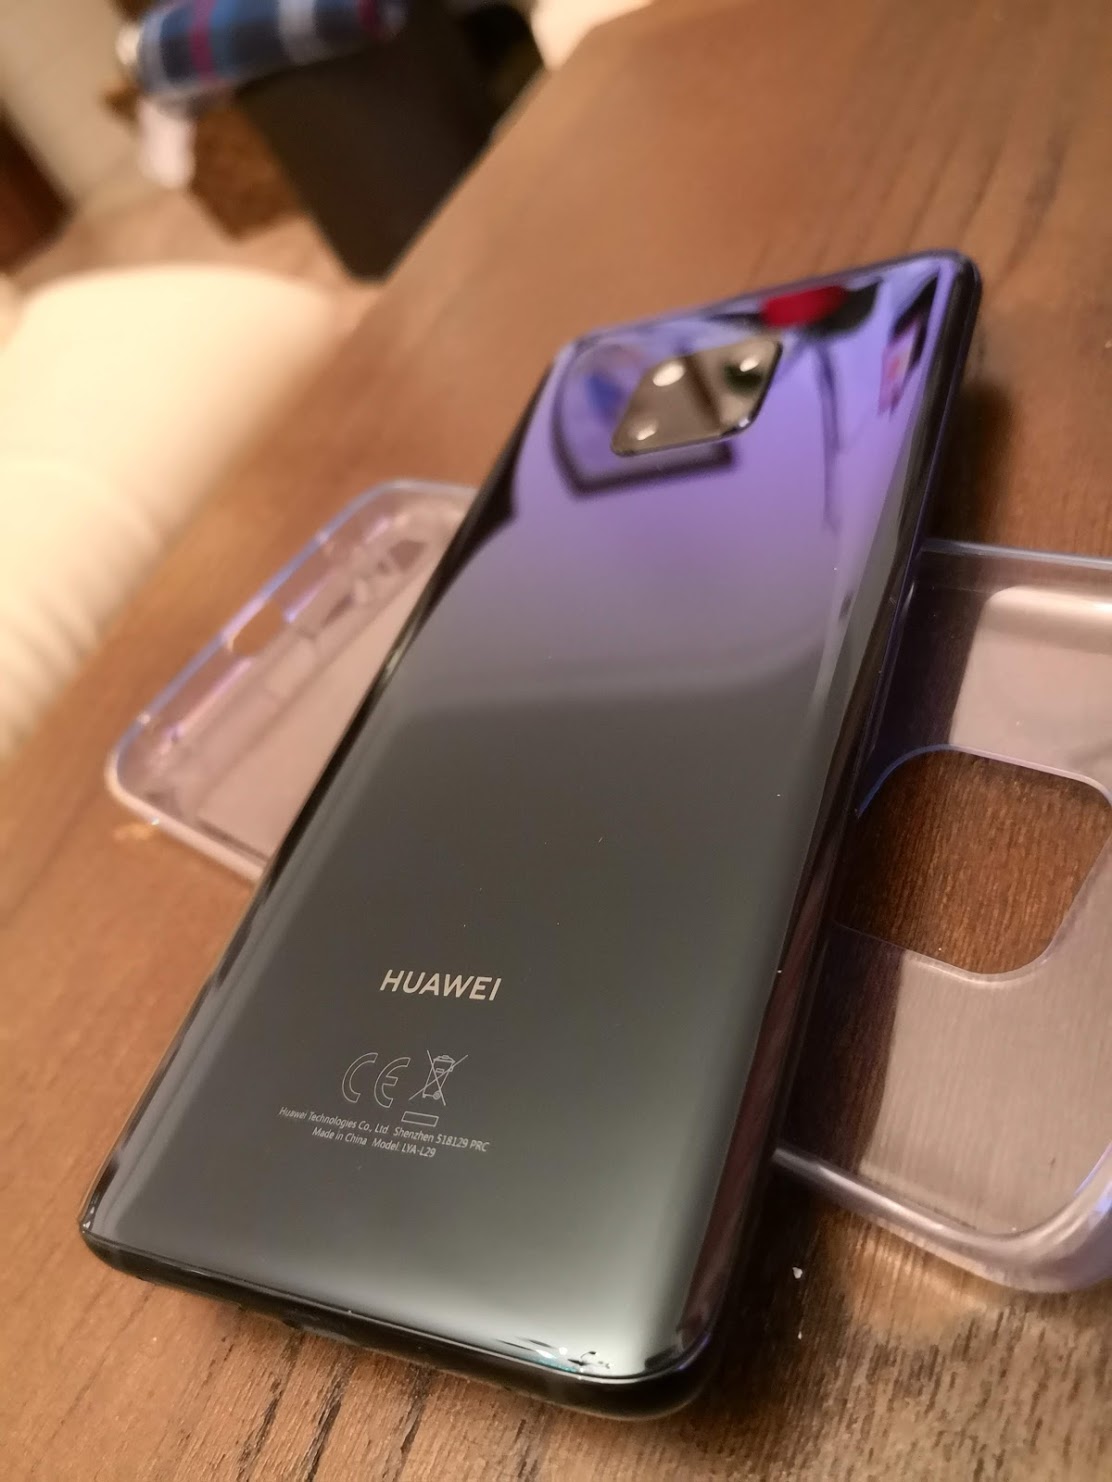 Beli Note 10+ atau tunggu Huawei Mate 30 Pro? 1